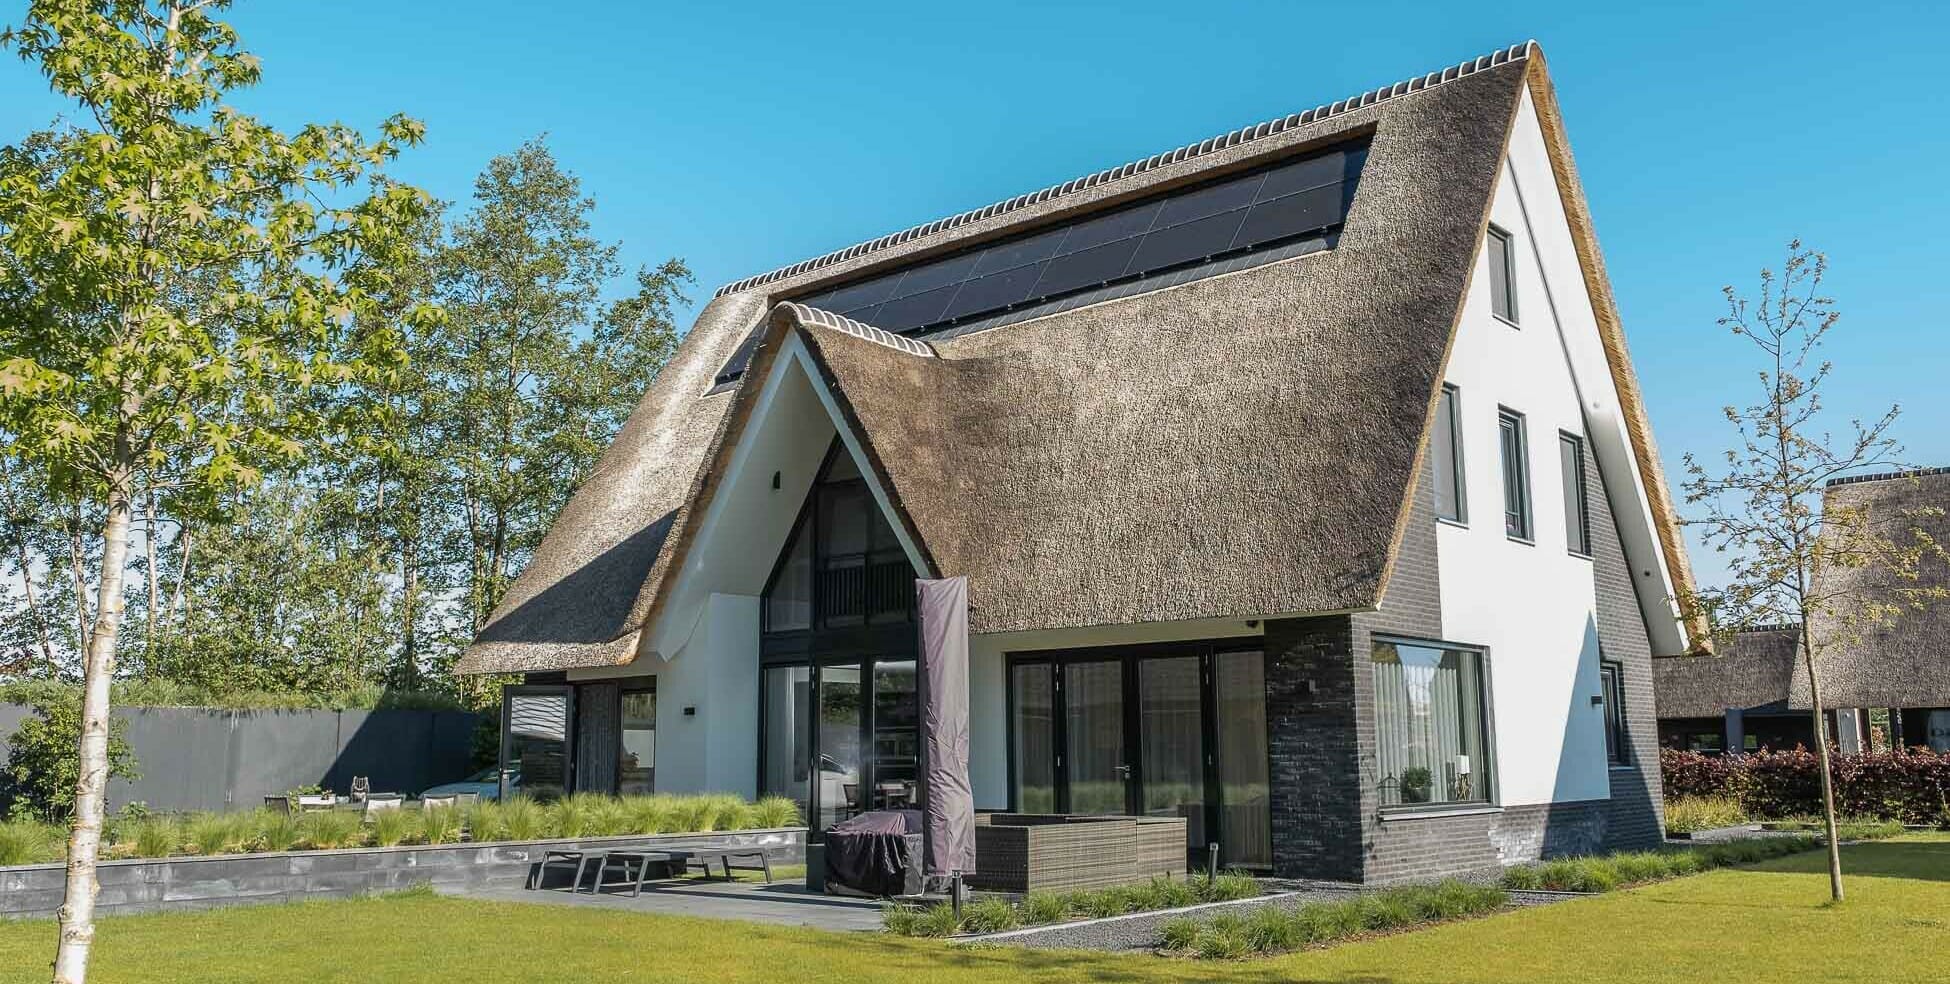 Nieuwbouw rietgedekte villa Harderwijk, ontwerp Valk Architecten